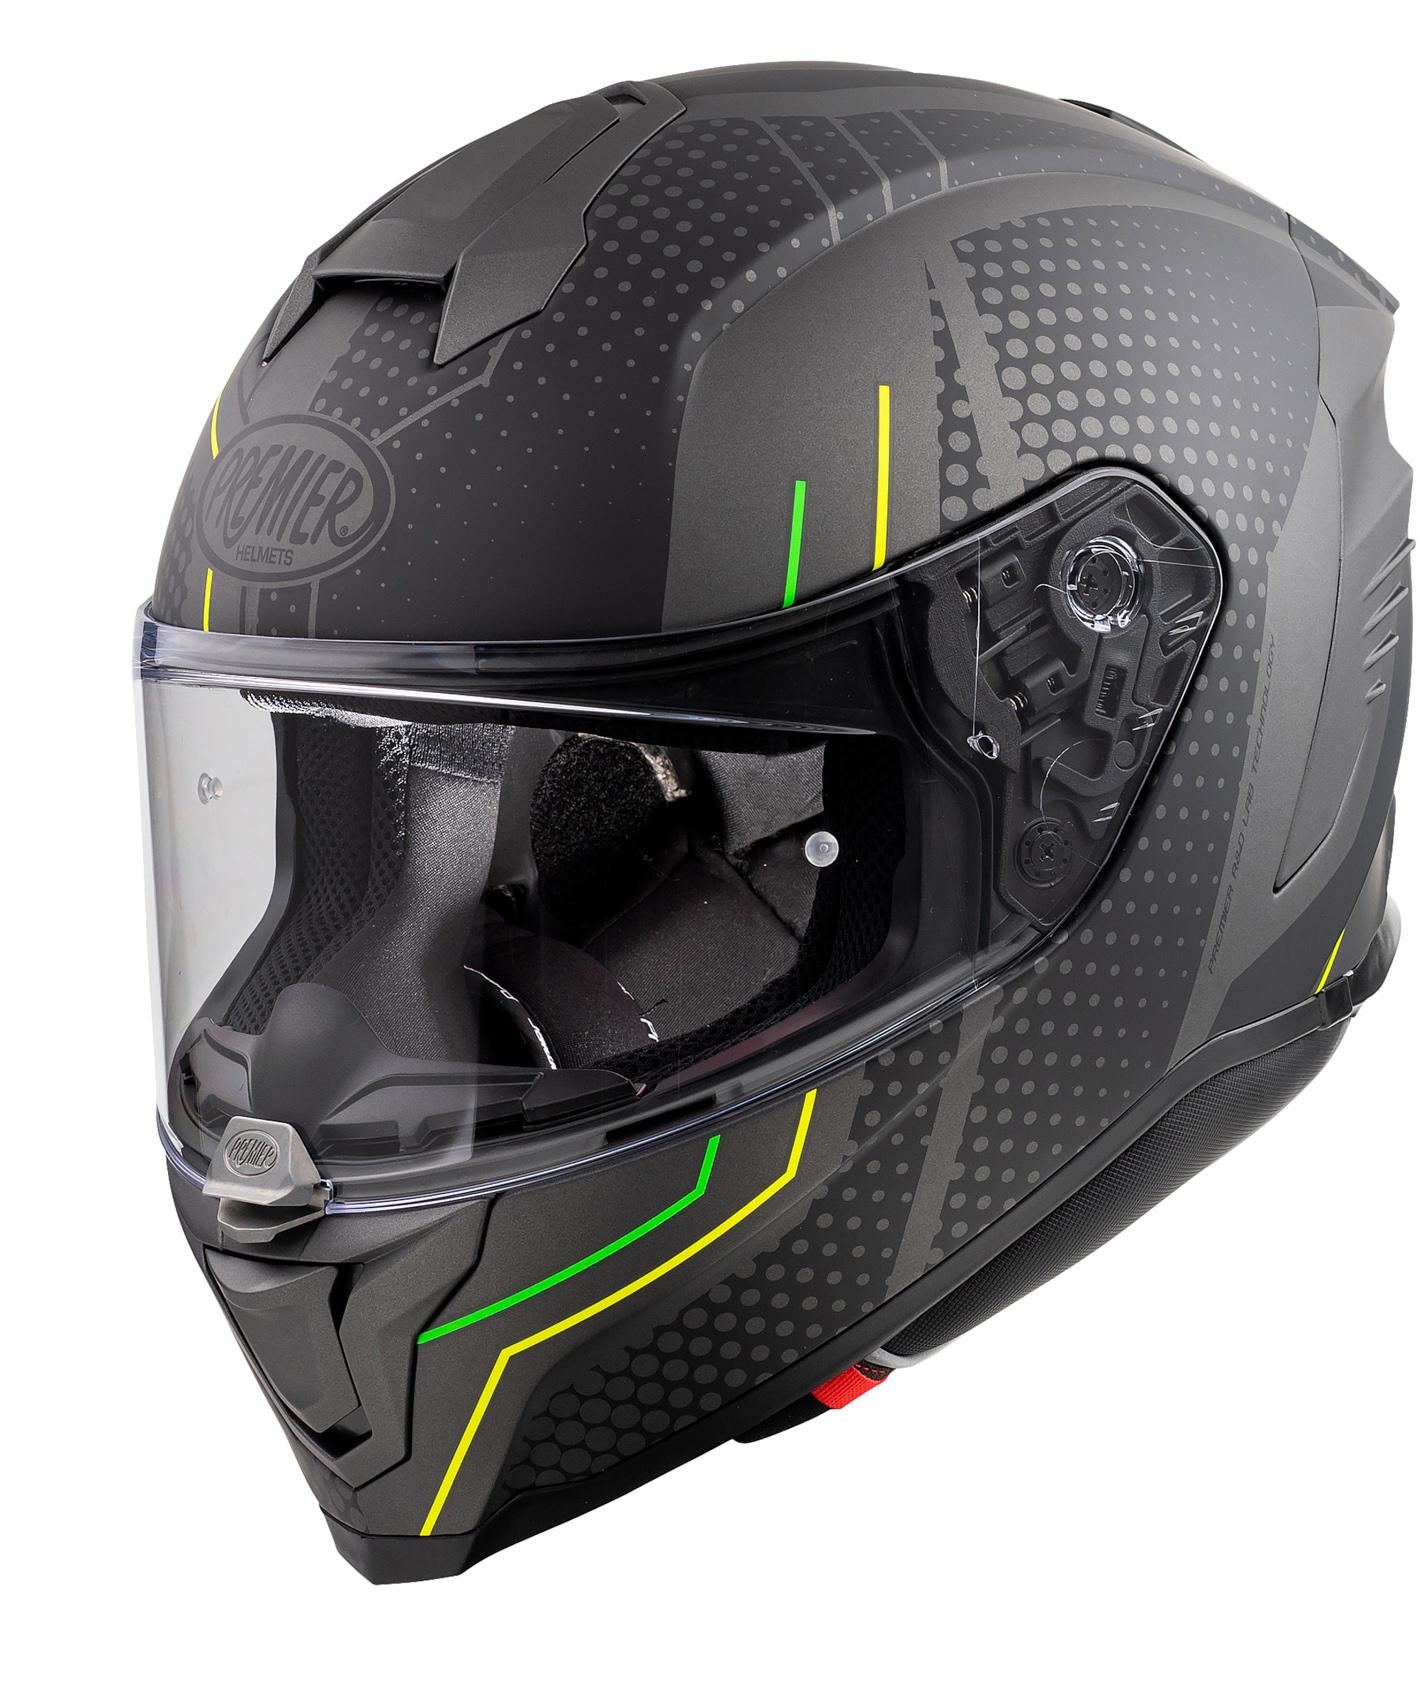 Premier Hyper Bp Full Face Motorcycle Helmet - Black/Gunmetal, Xl